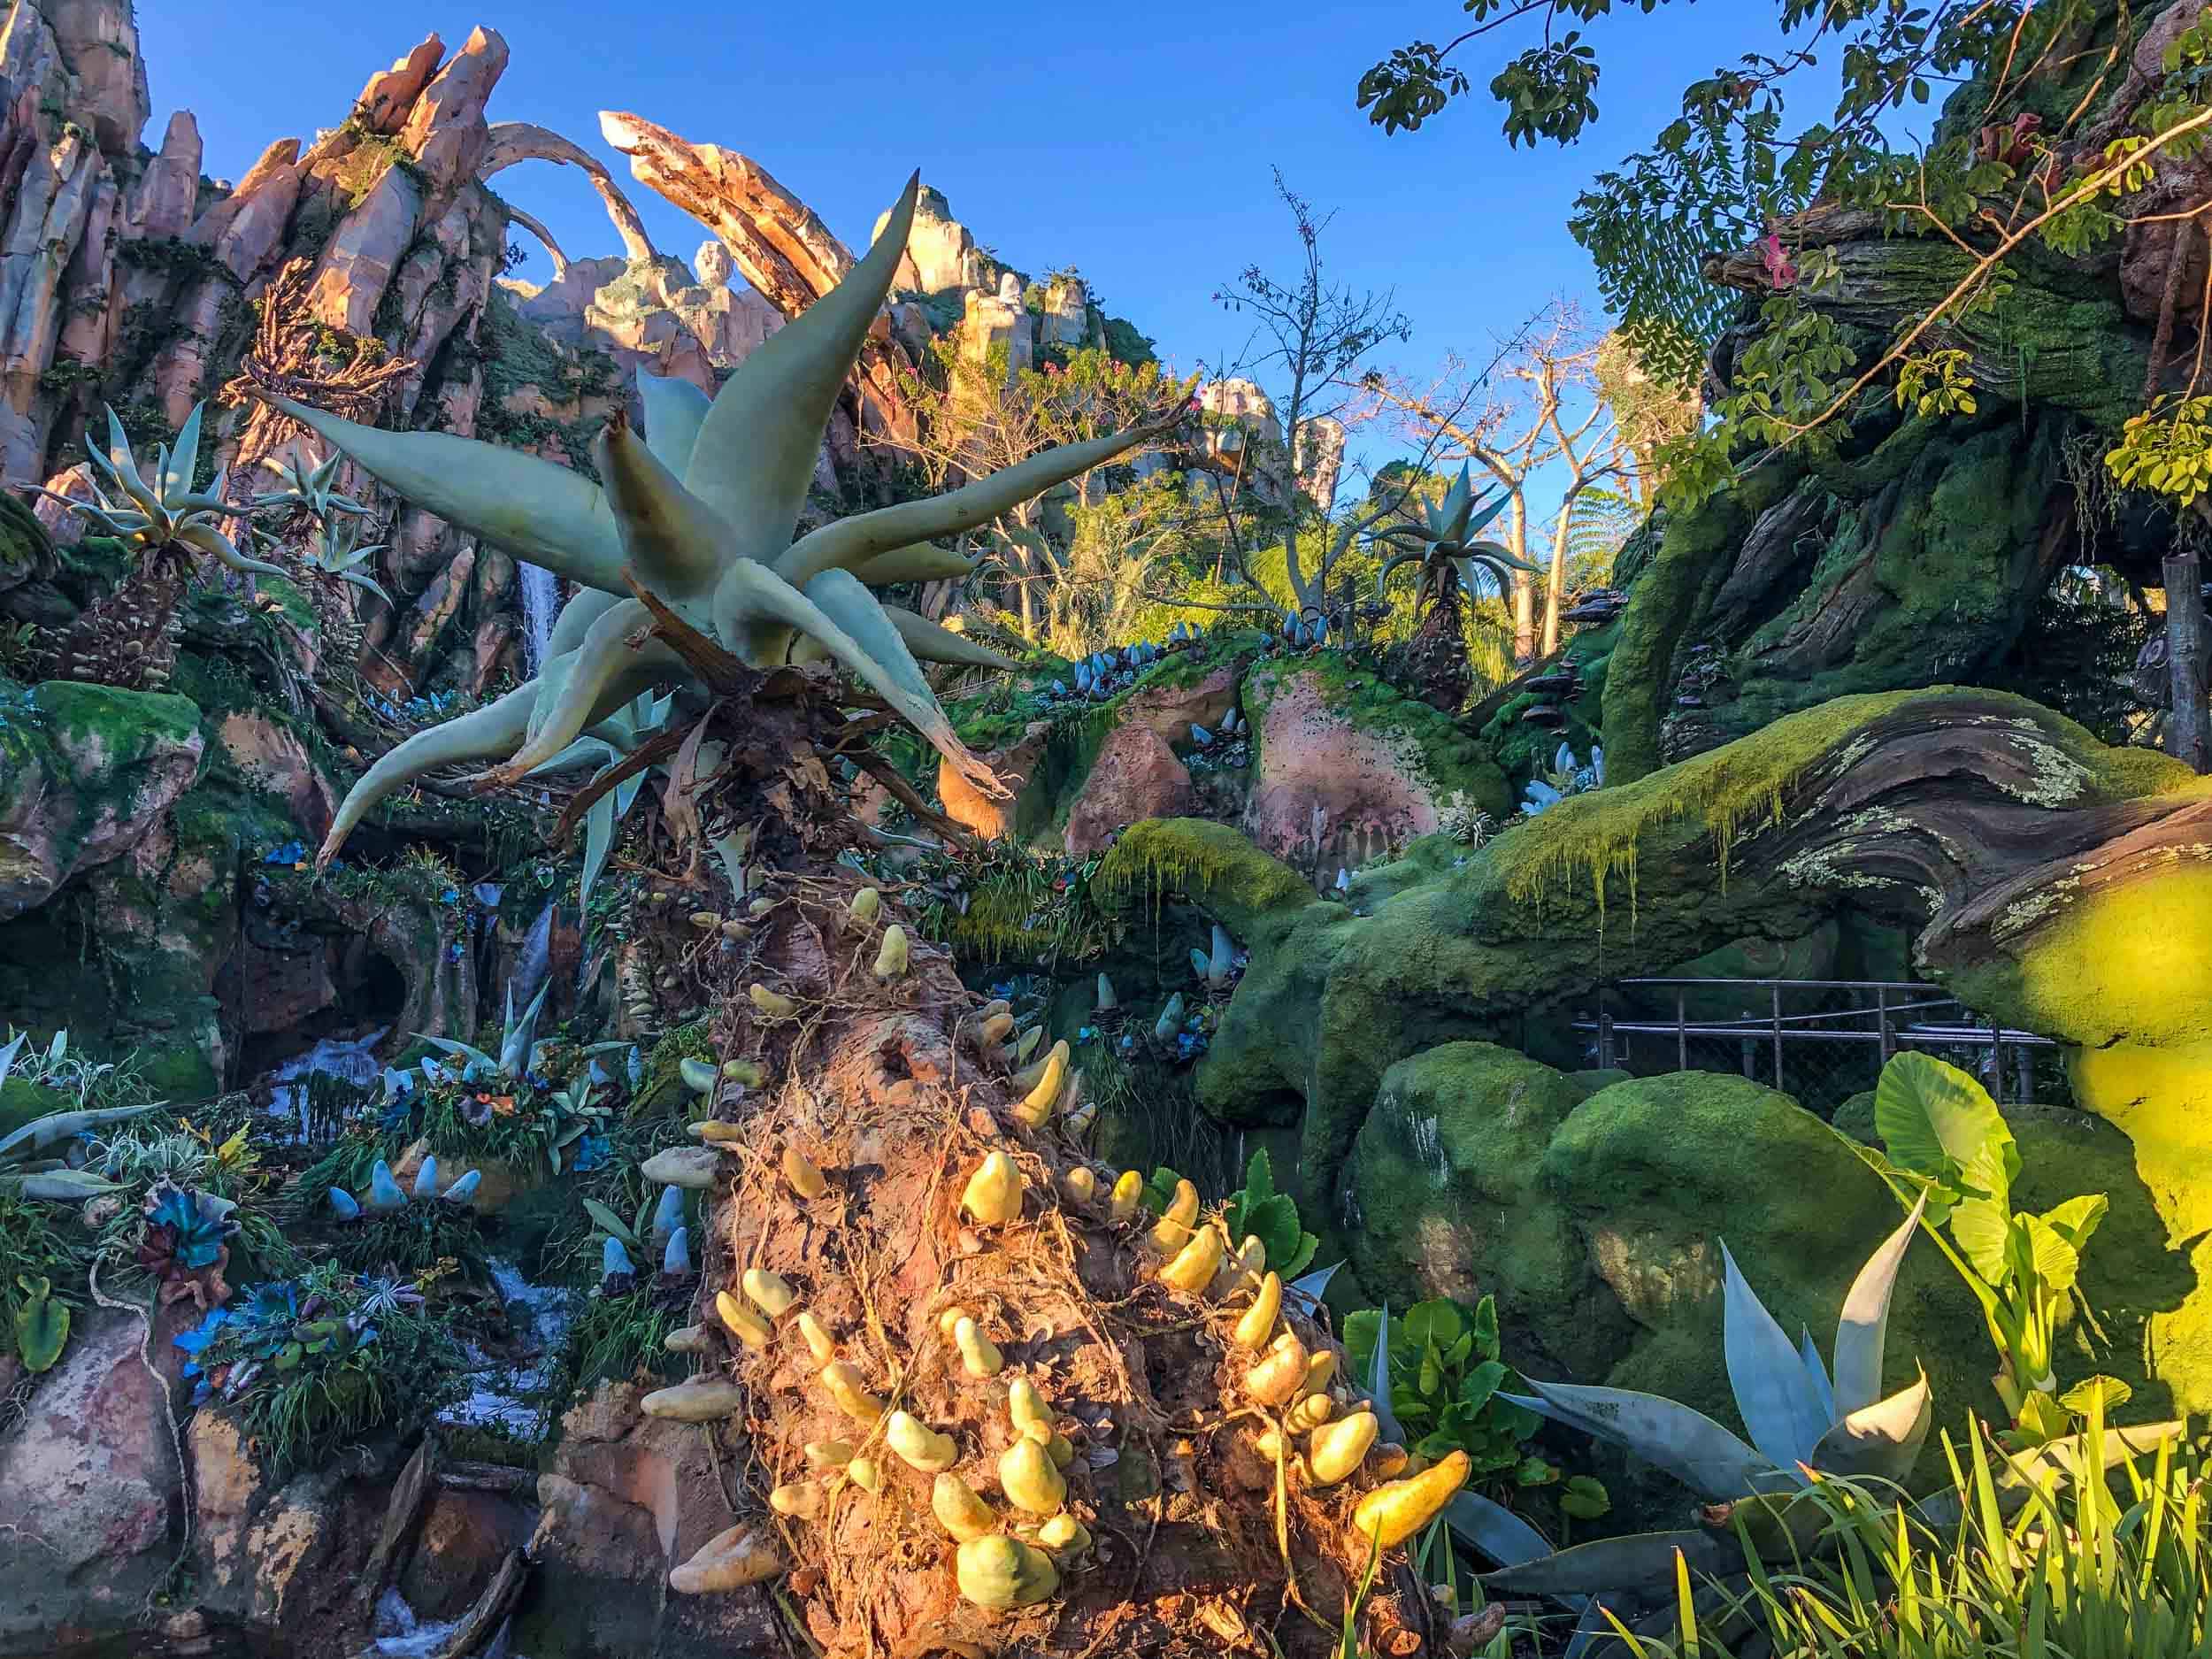 Exploring the lush Pandora world is one of the best things to do at Animal Kingdom, Disney World Orlando